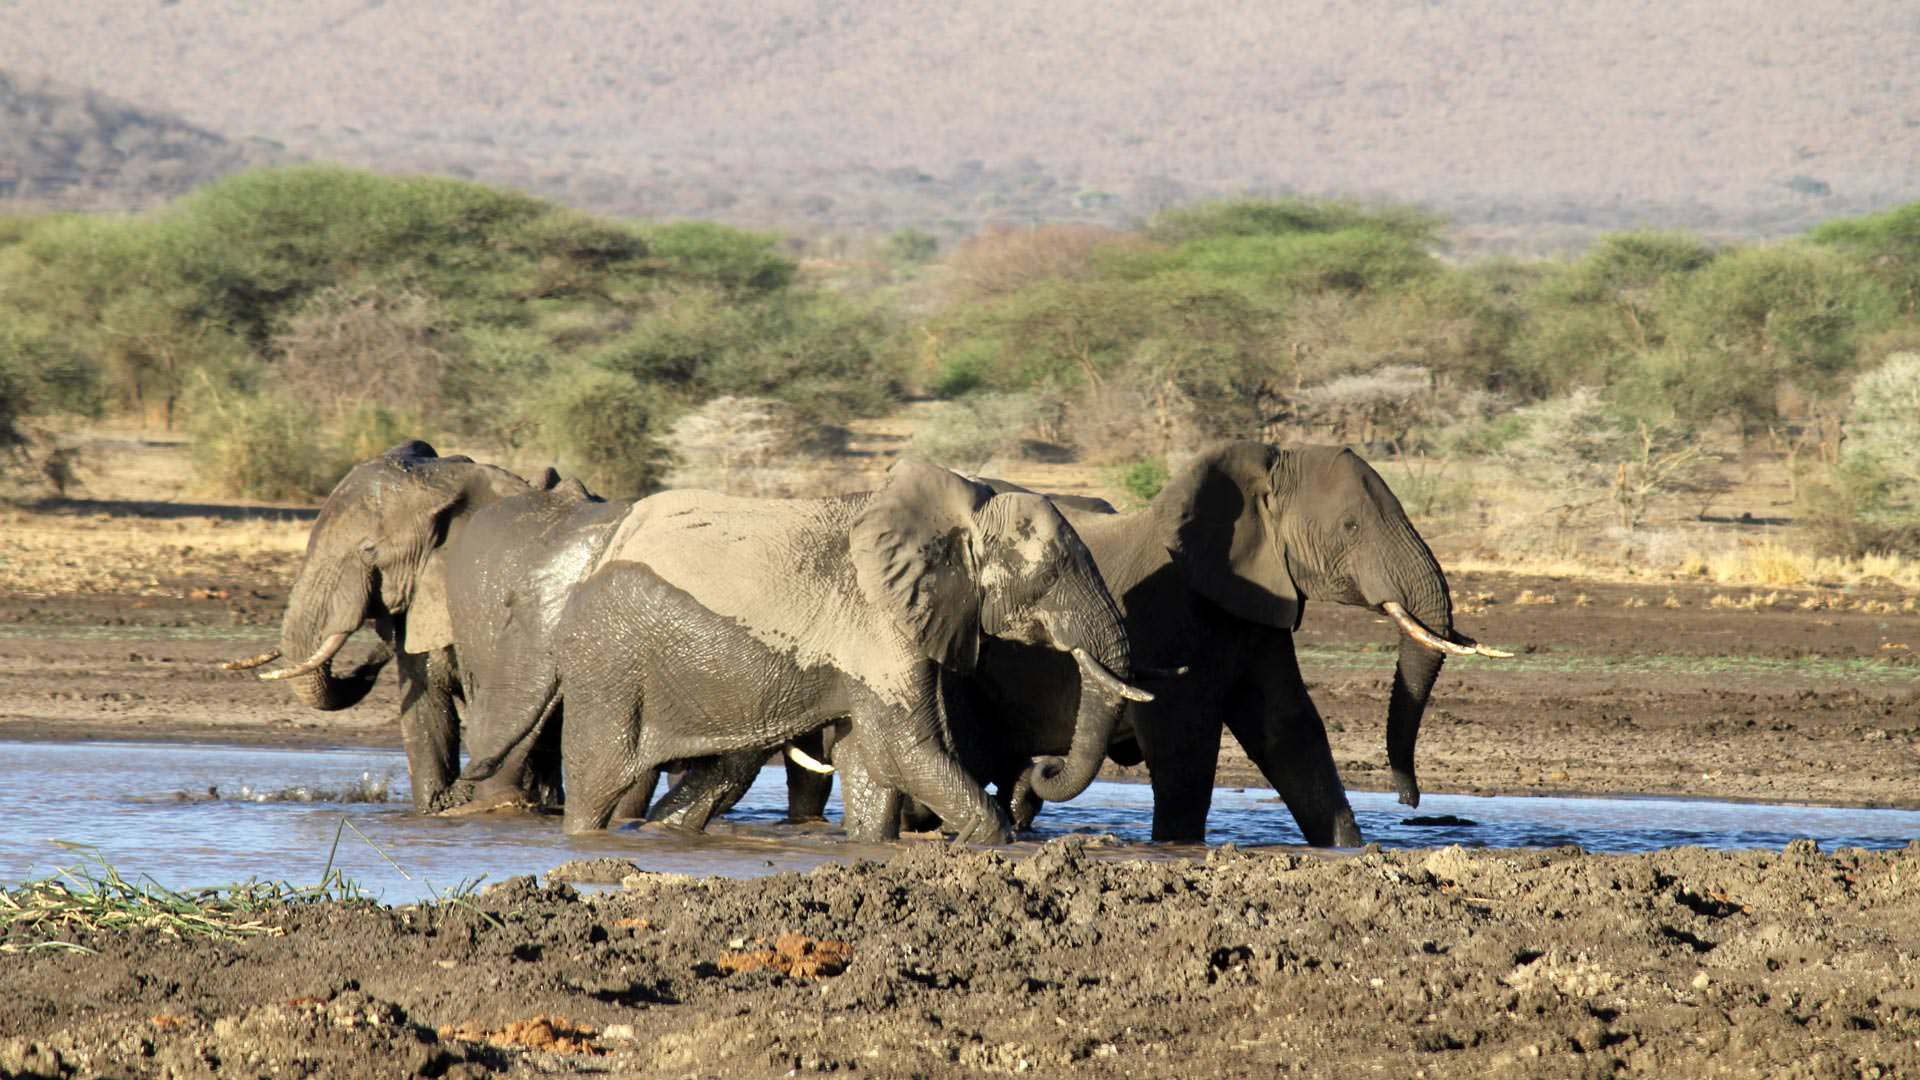 Elephants in Dam at Manyara Ranch Conservancy